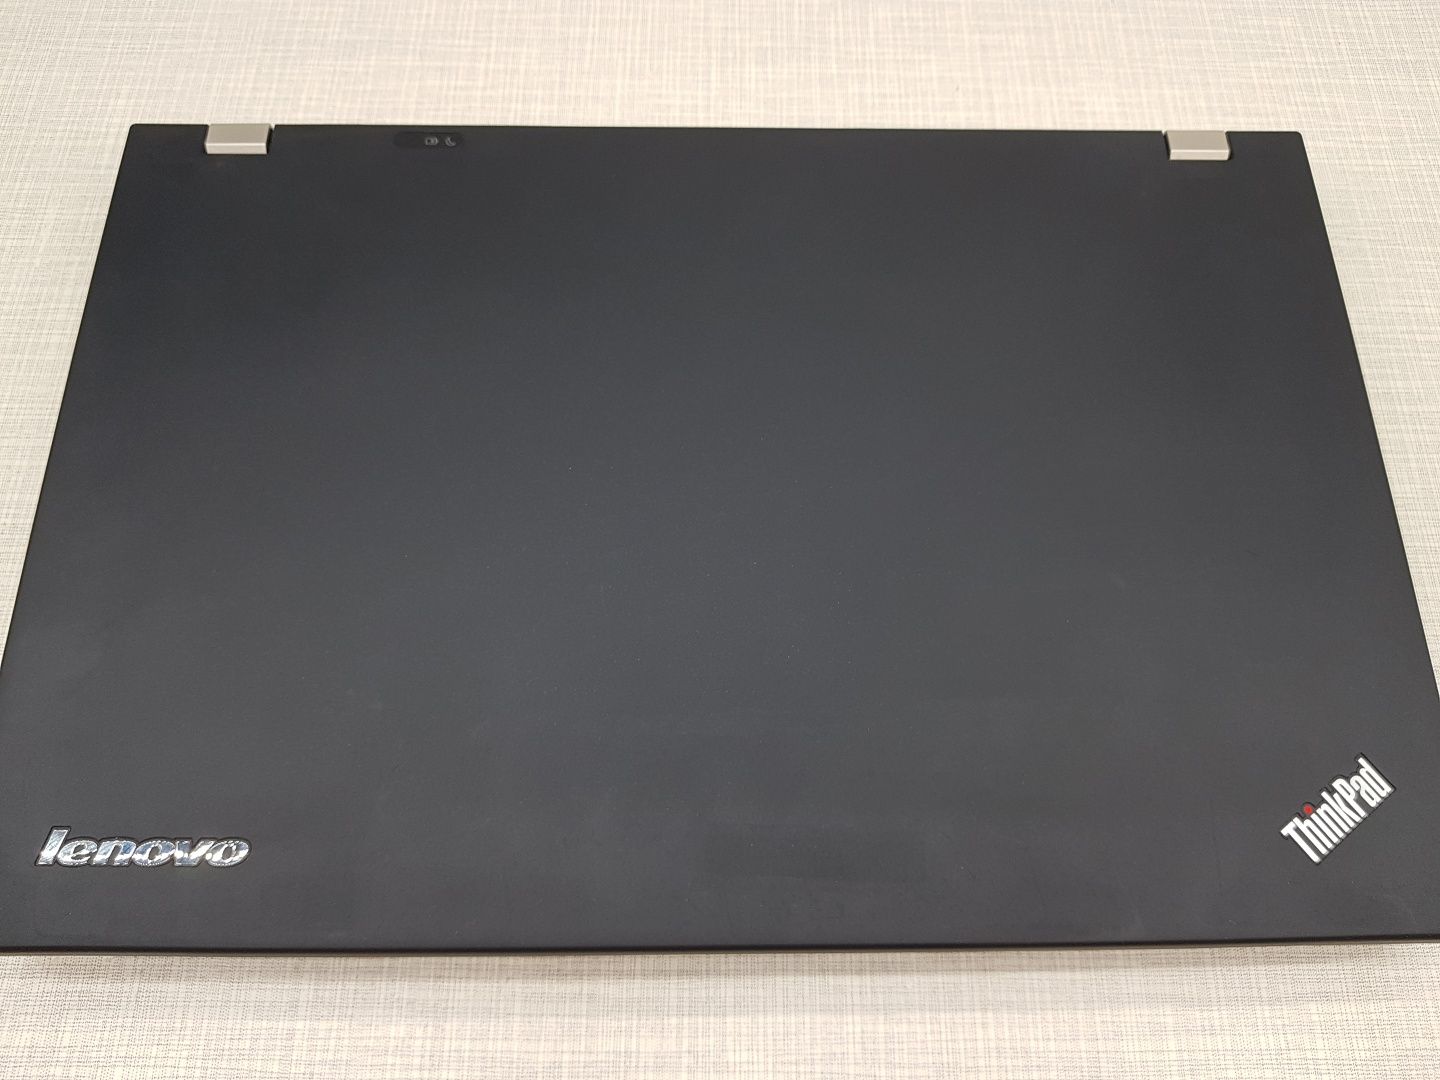 Ноутбук Lenovo T520 i5-2520M 2,50-3,20GHz, 8Gb, 500Gb